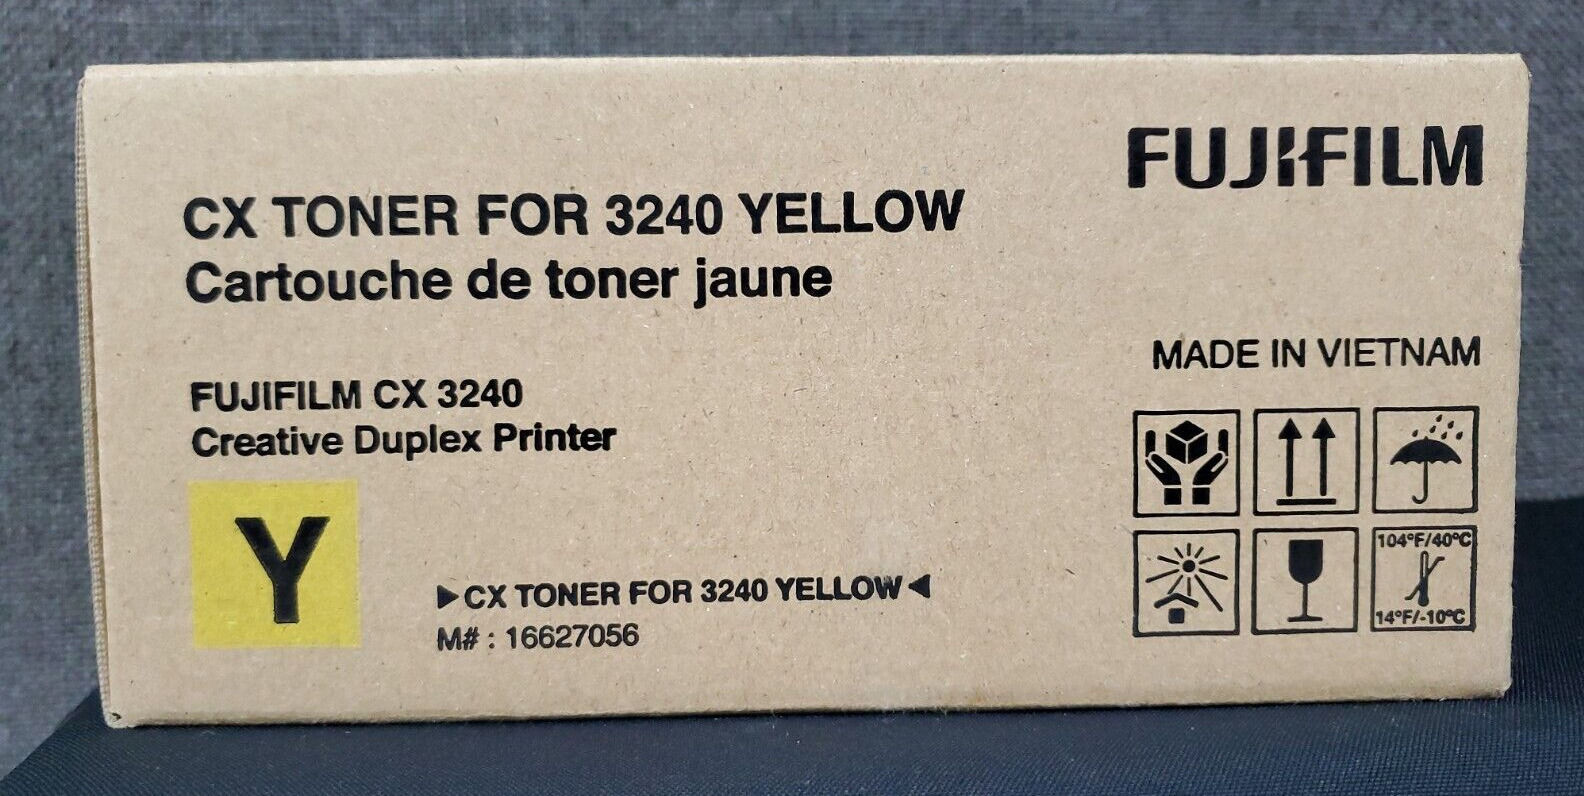 NEW Fujifilm CX Toner For 3240 Yellow Model CT203195 Fuji Film